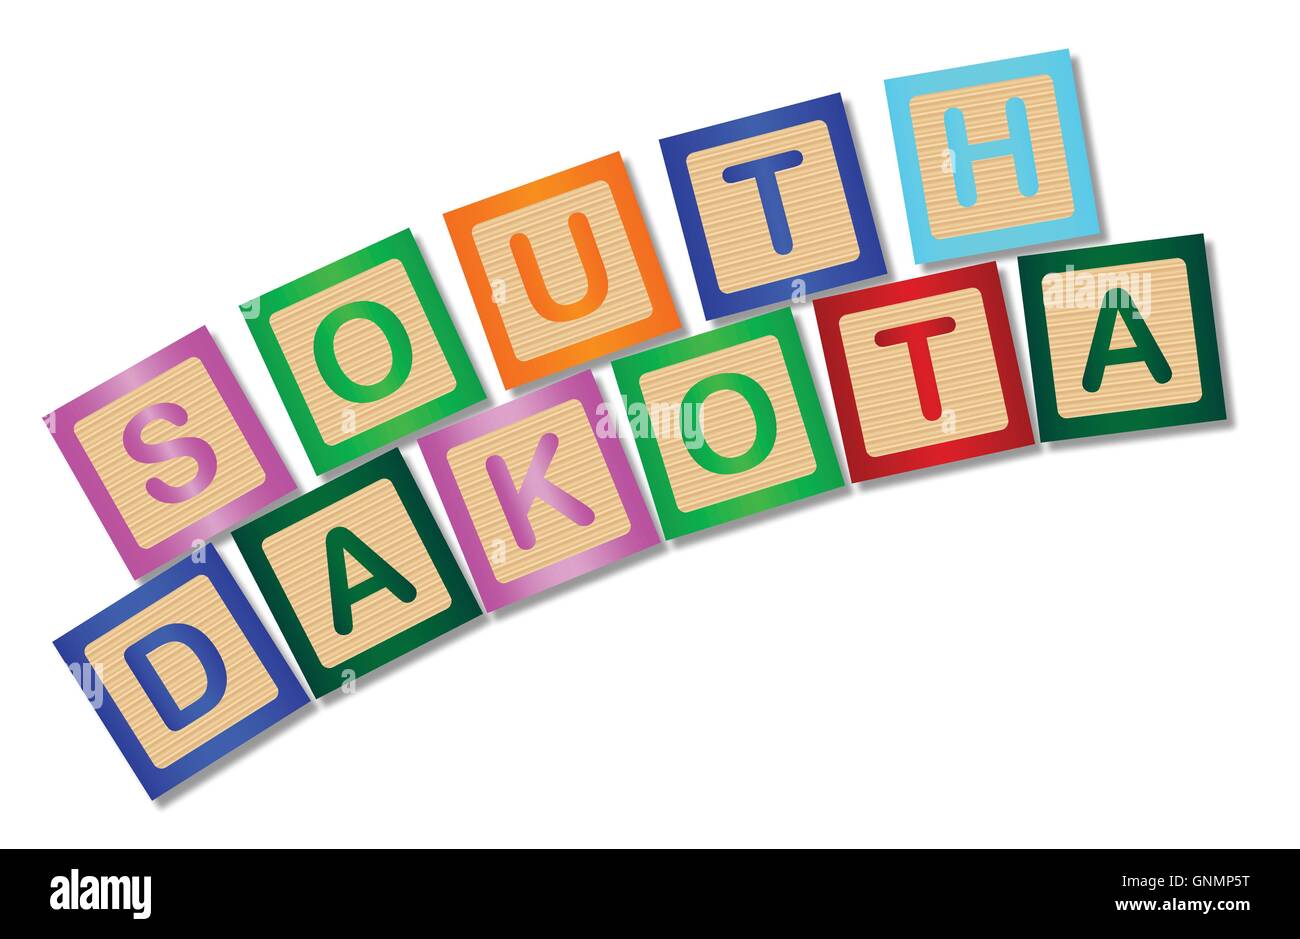 South Dakota Wooden Block Letters Stock Vector